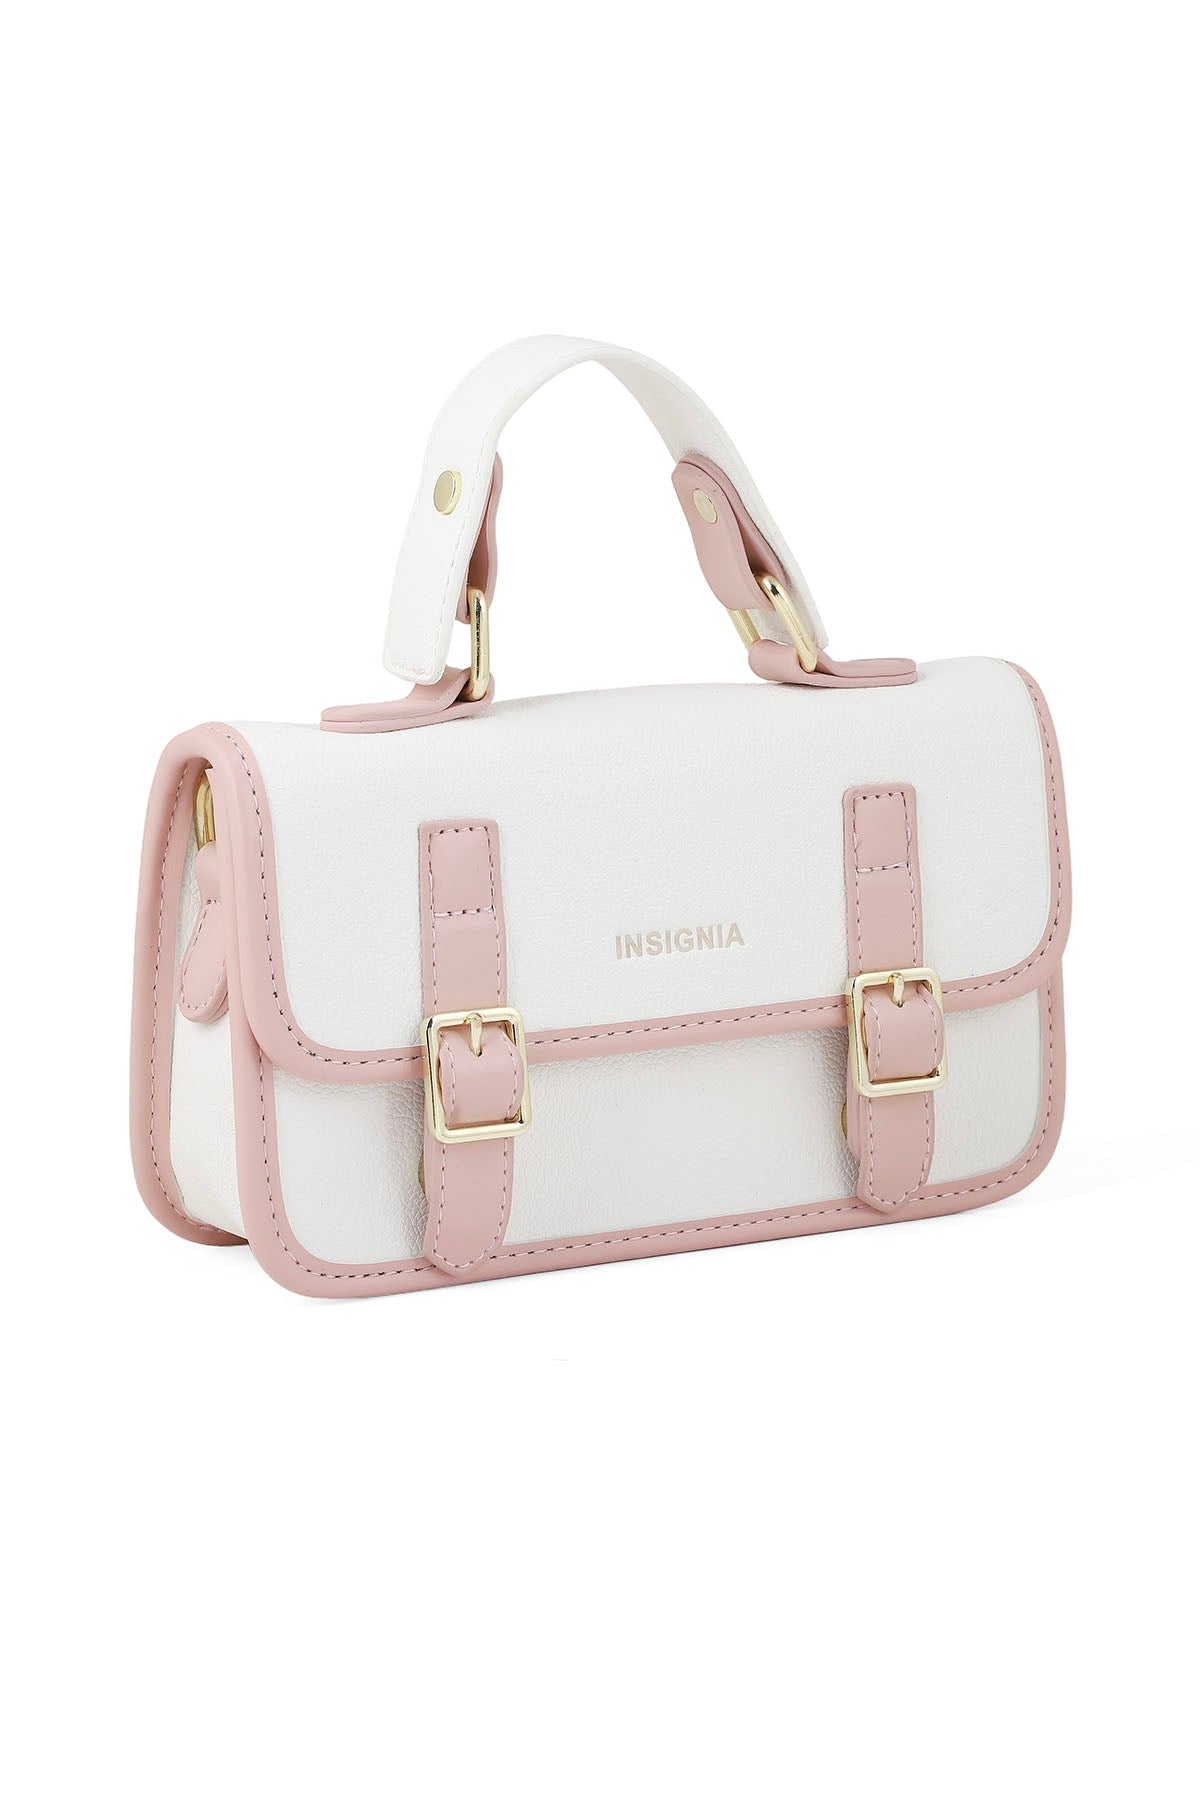 Top Handle Hand Bags B14949-Pink